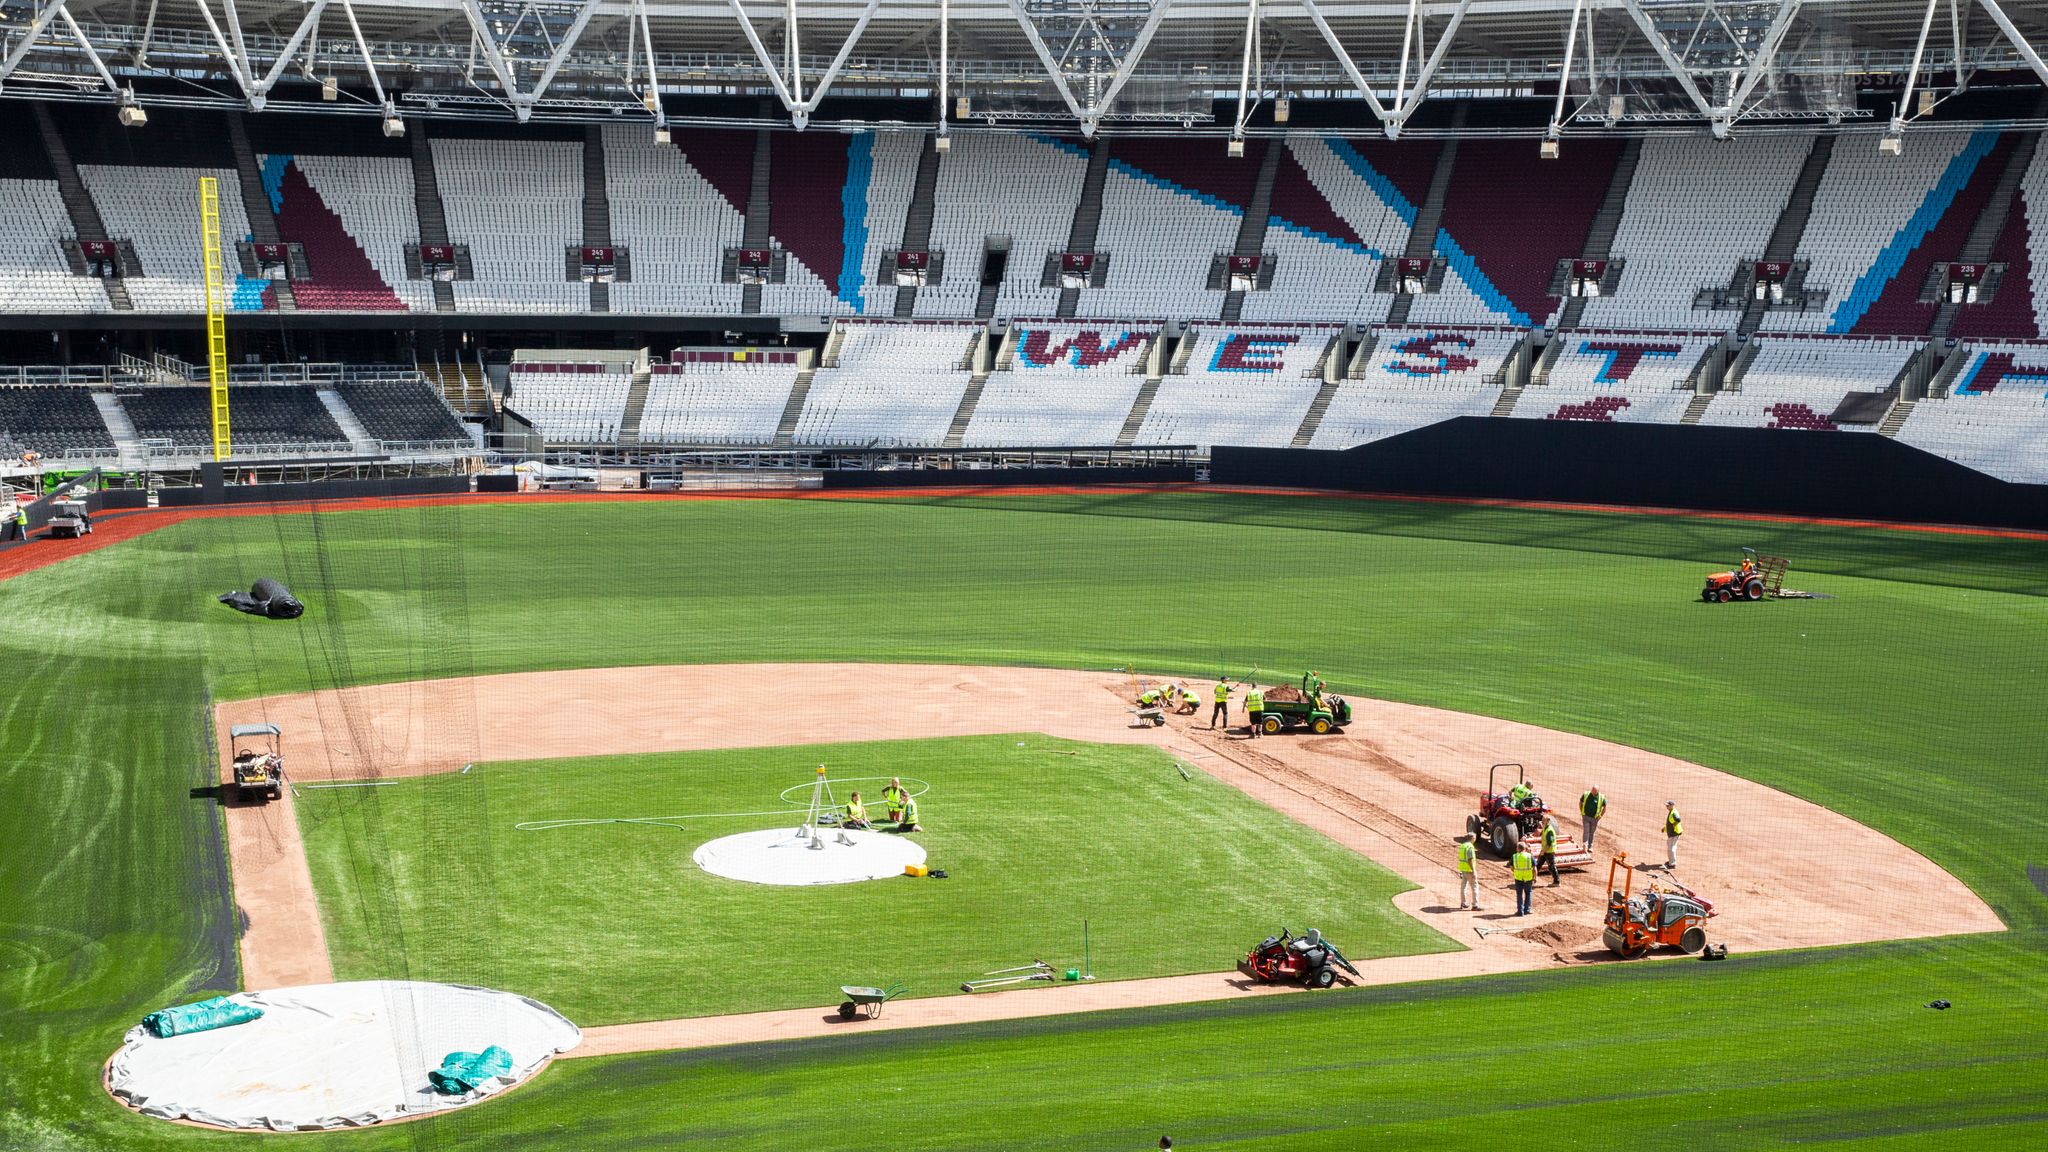 West Ham's London Stadium transformed for Major League Baseball series, Baseball News